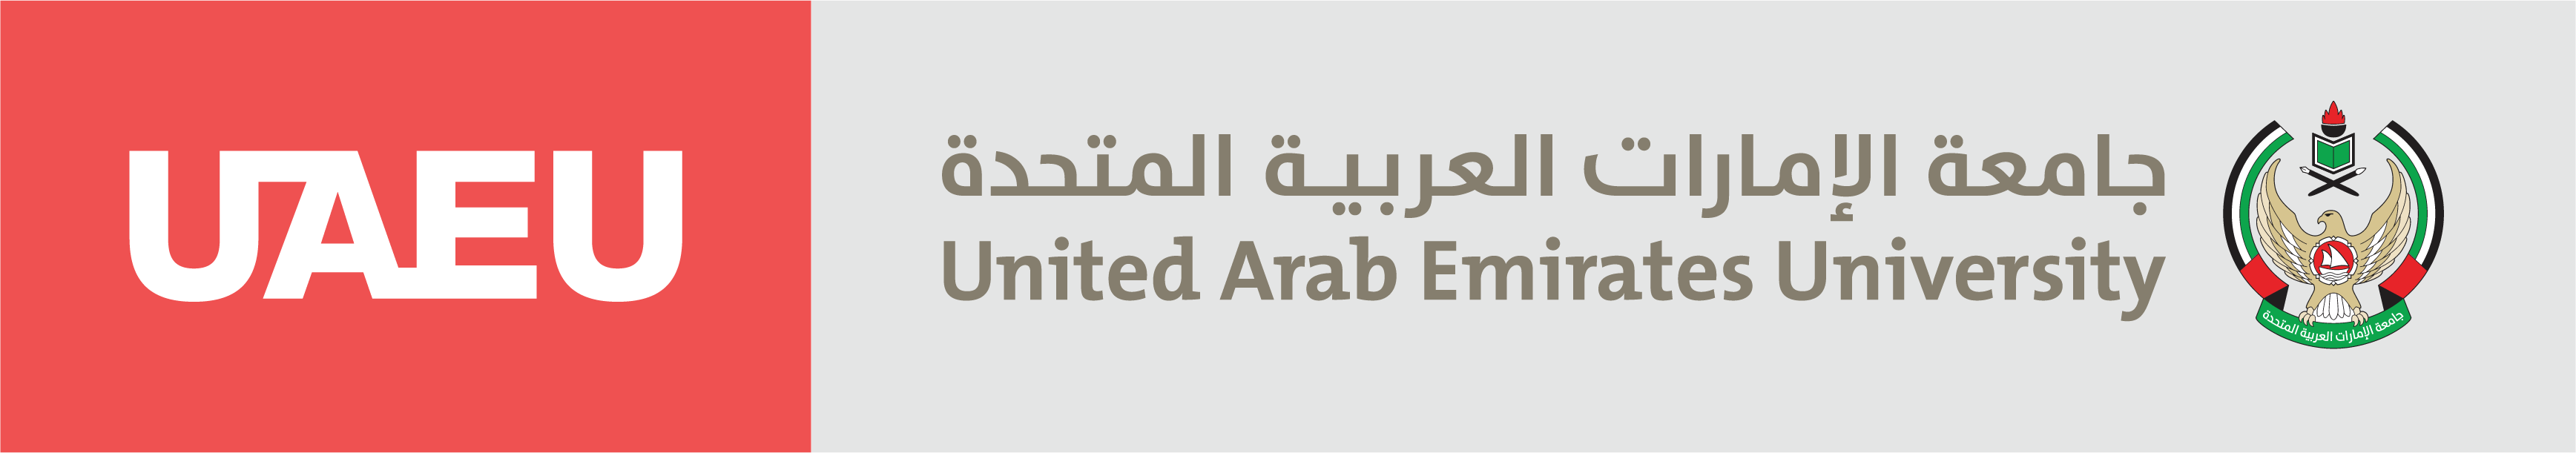 UAEU-Logo